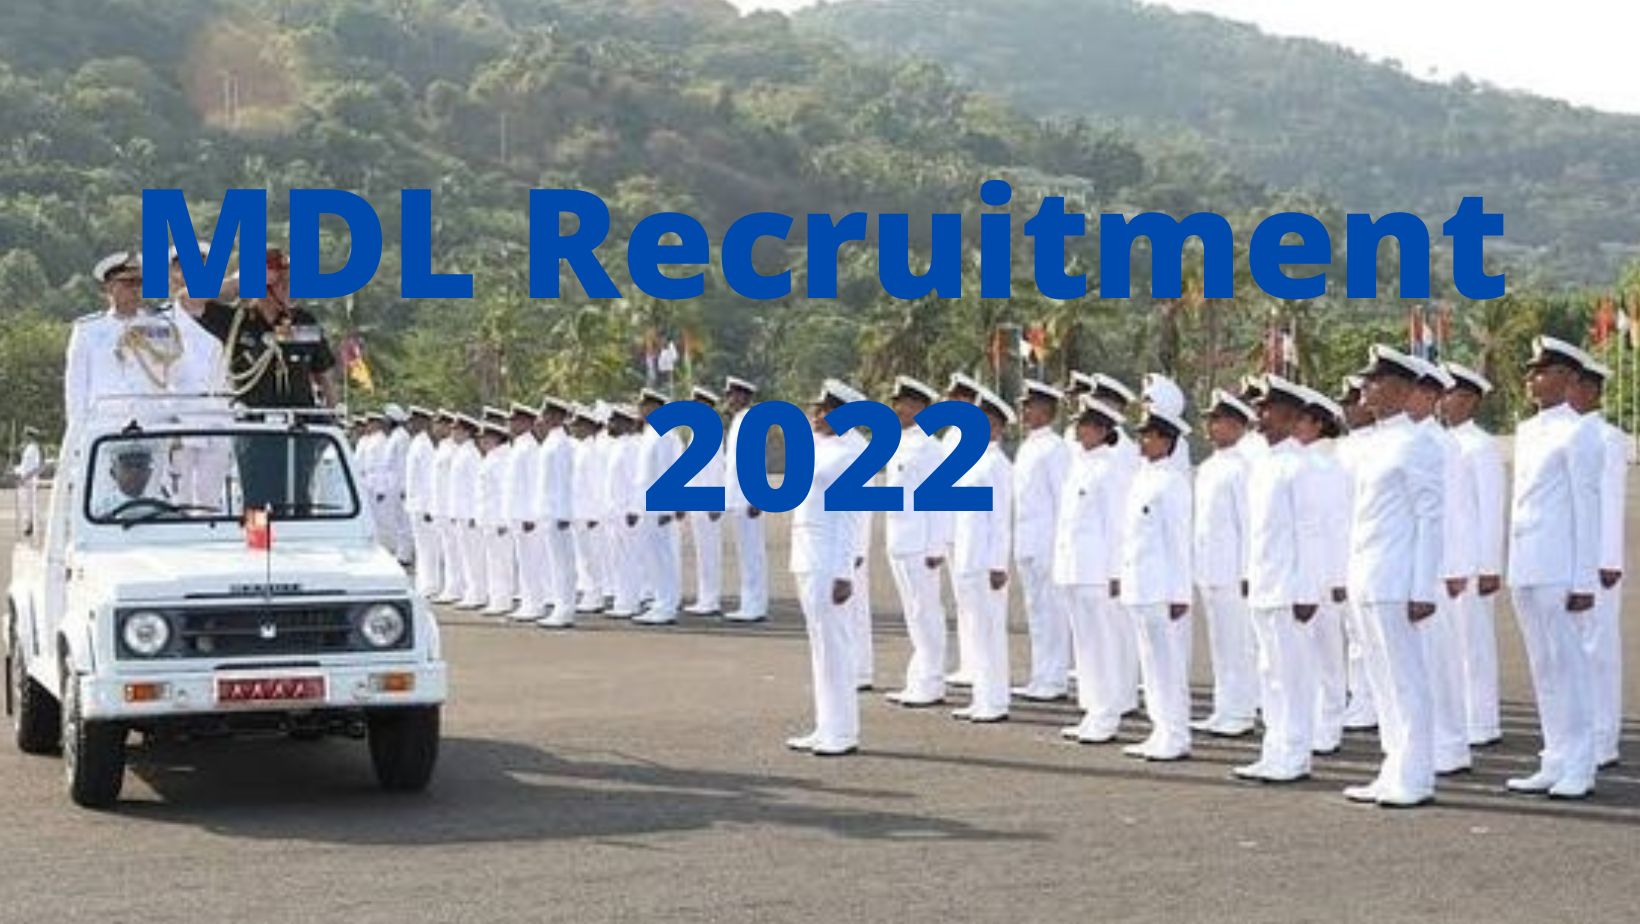 MDL Recruitment 2022